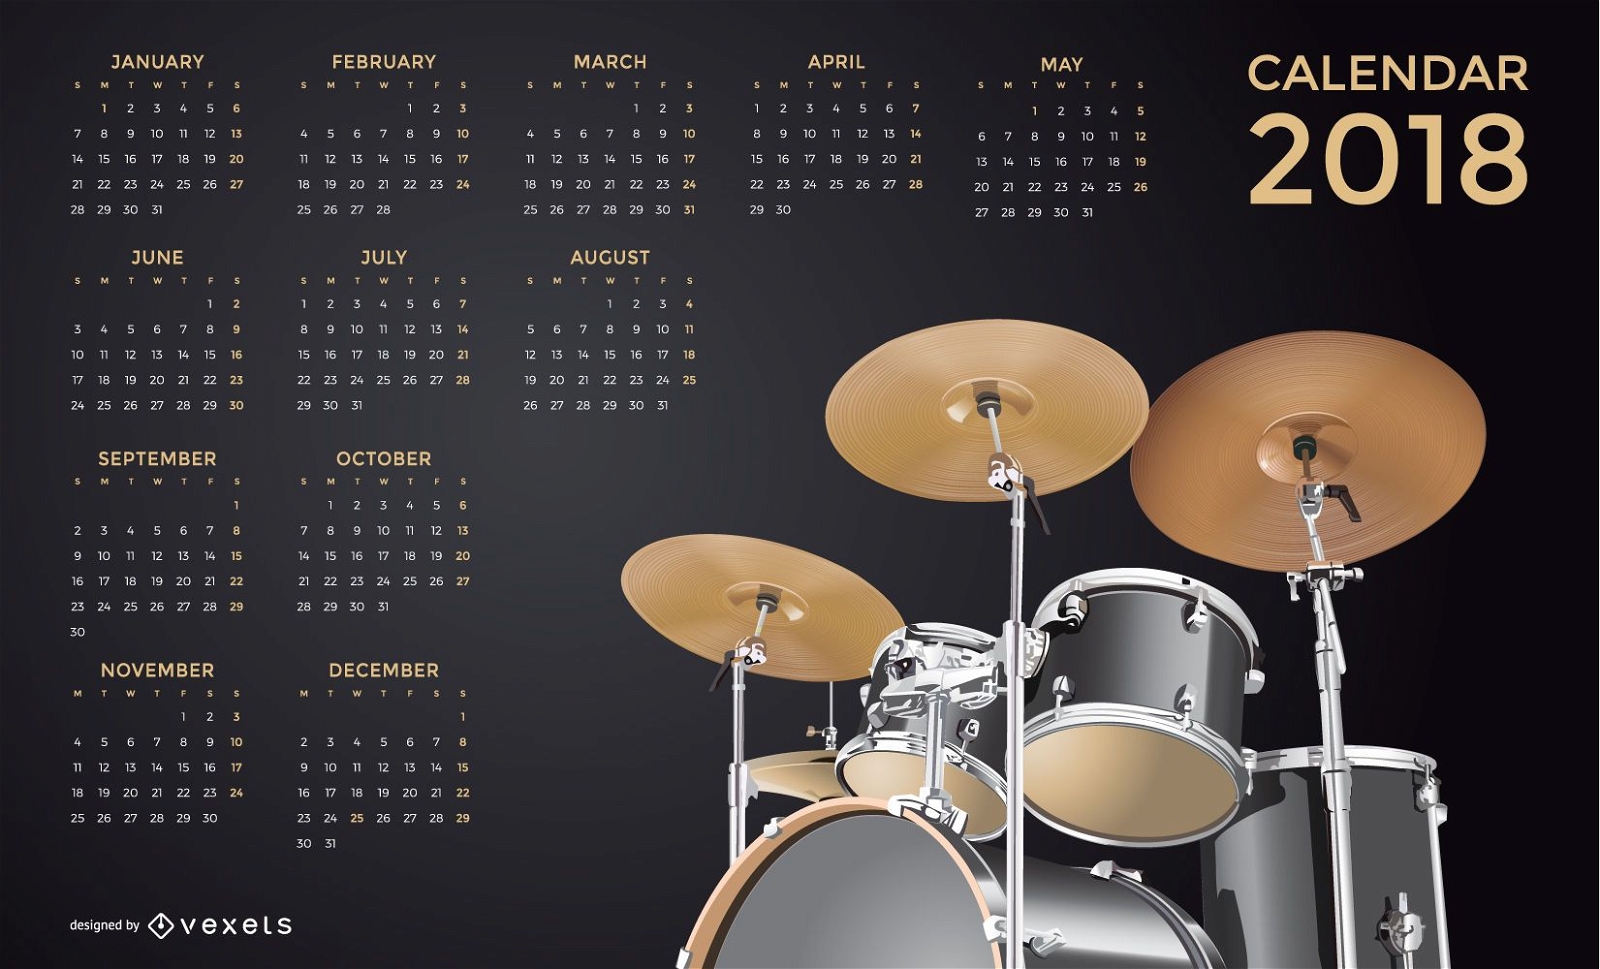 Music 2018 calendar